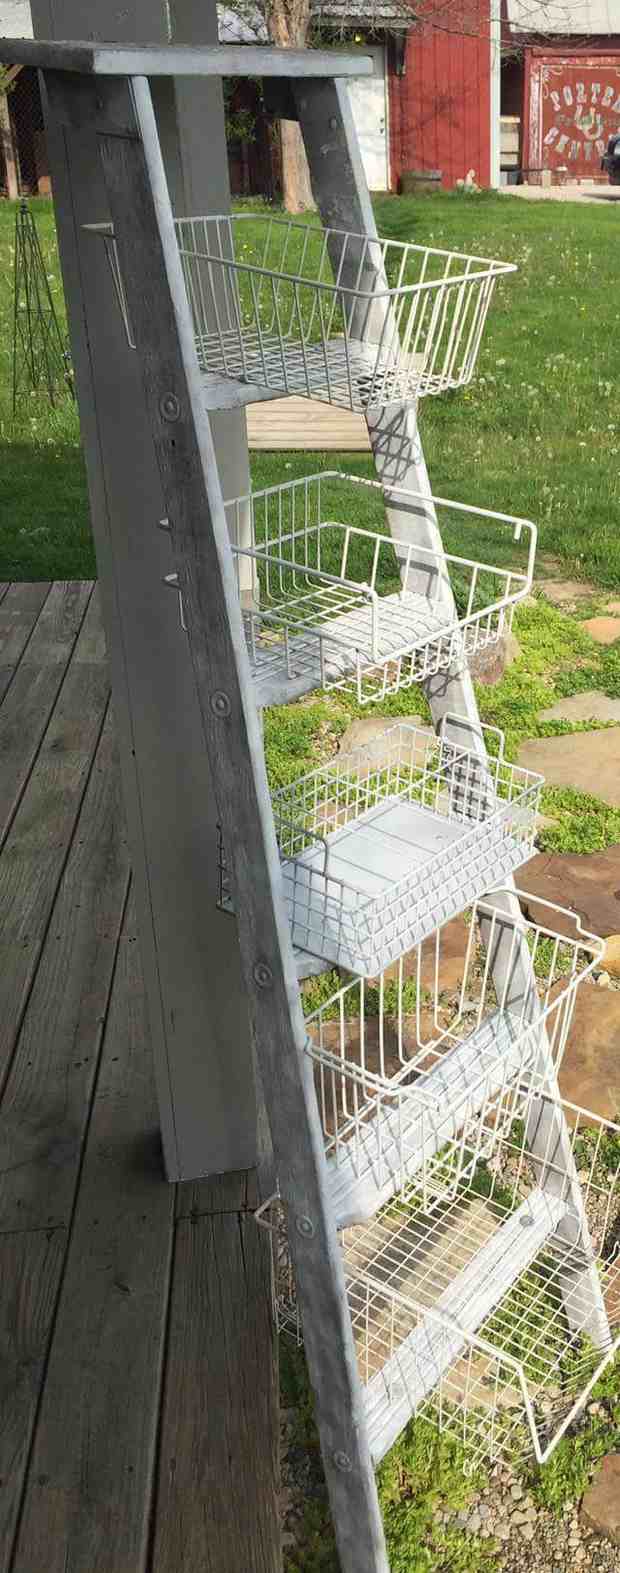 upcycled ladder shelves creative garden diy patio project idea